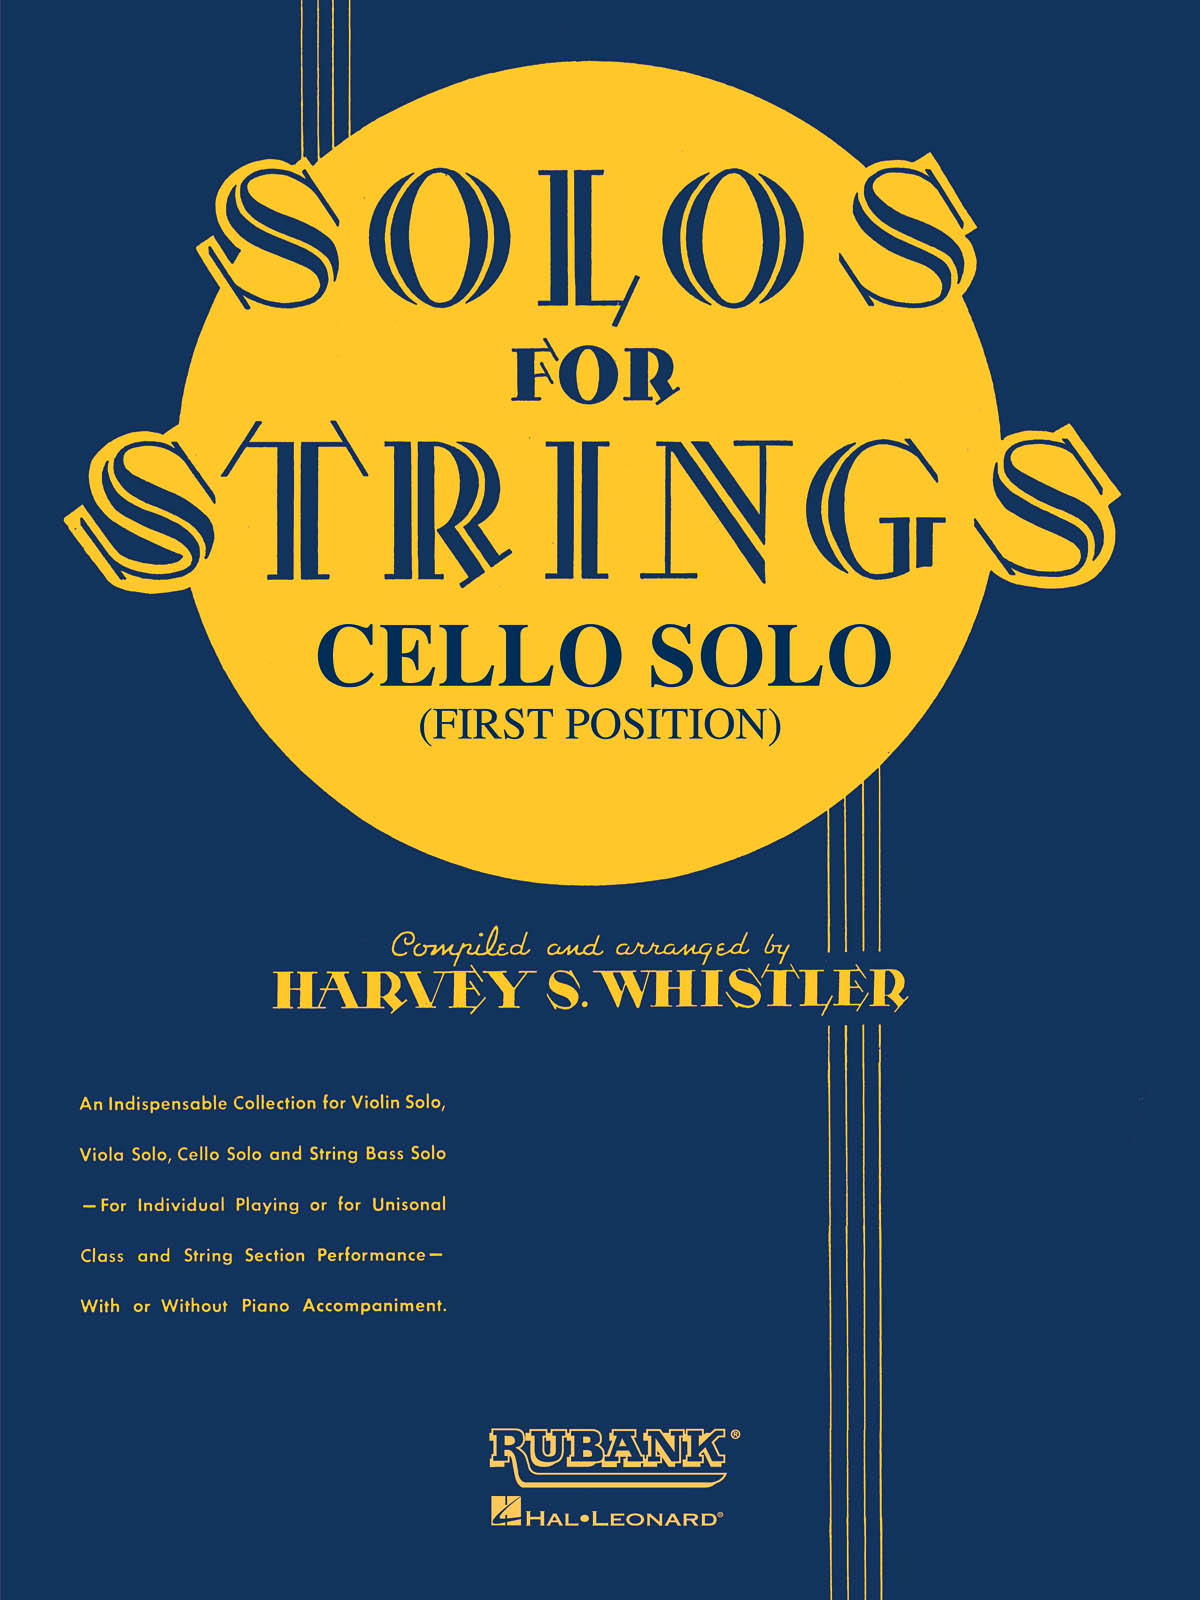 Solos For Strings - Cello Solo (First Position) - pro violoncello